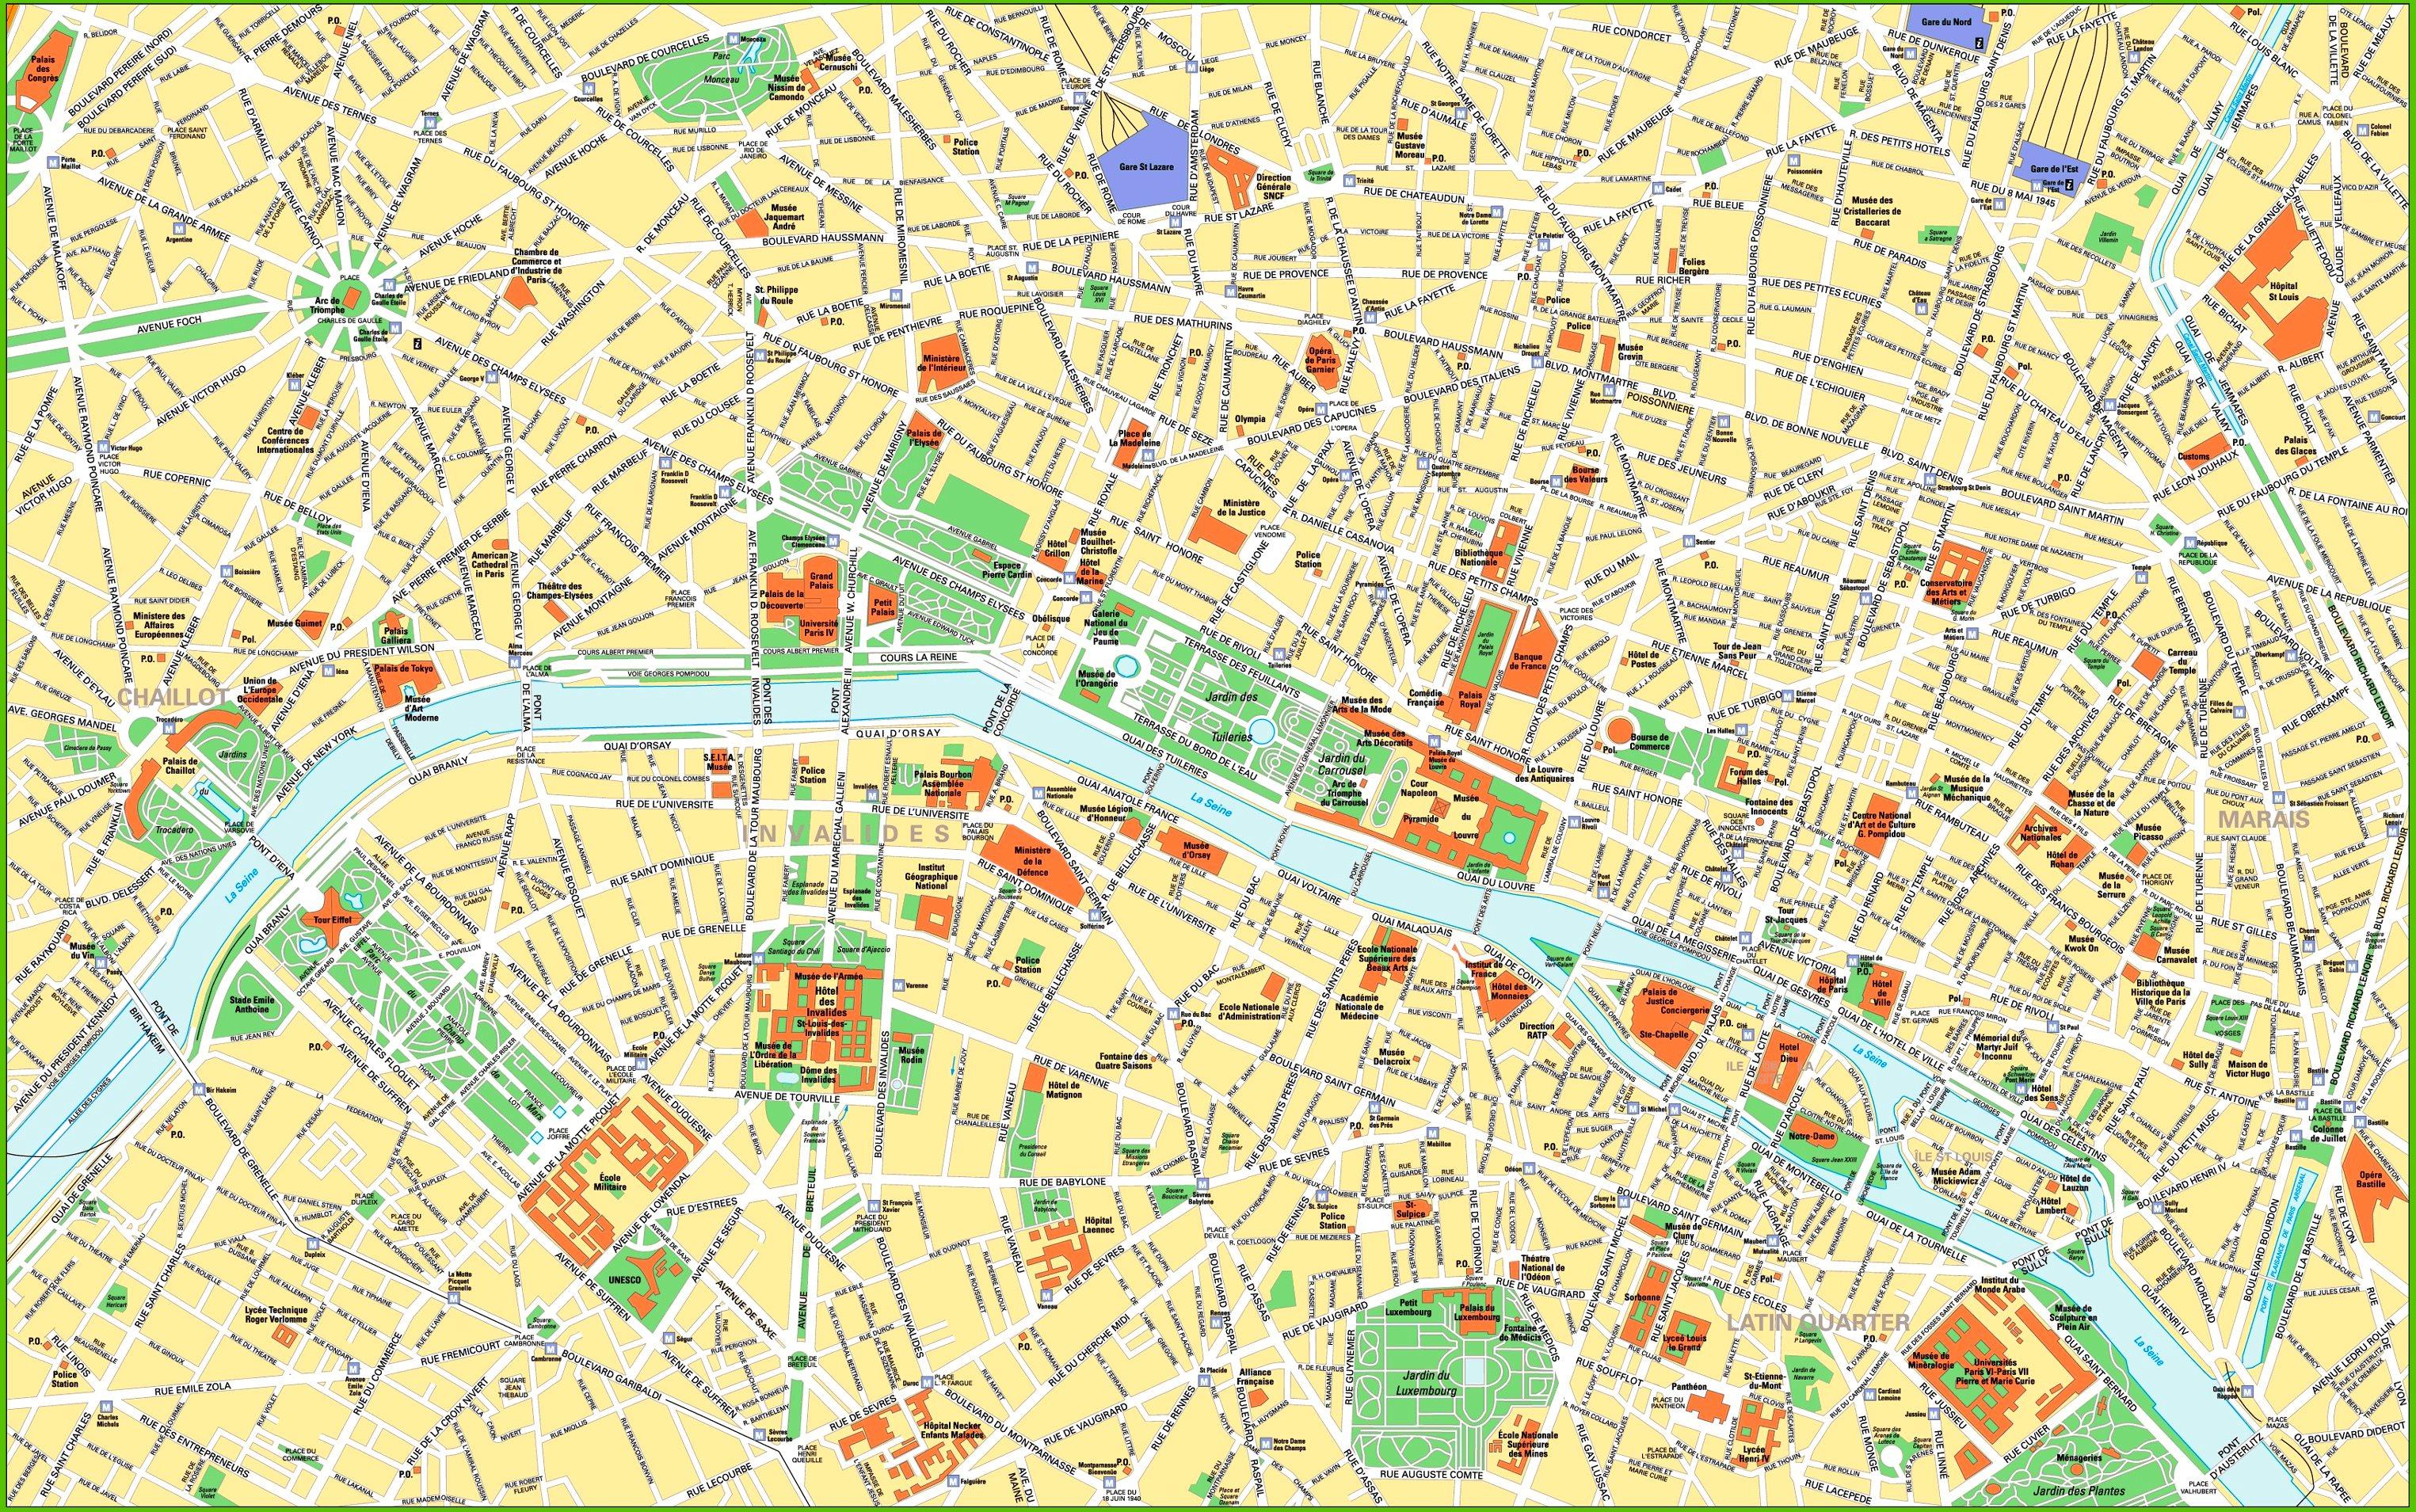 kort over paris centrum Paris City Center Map Kort Over Paris Sevaerdigheder I Centrum Af Byen Ile De France France kort over paris centrum